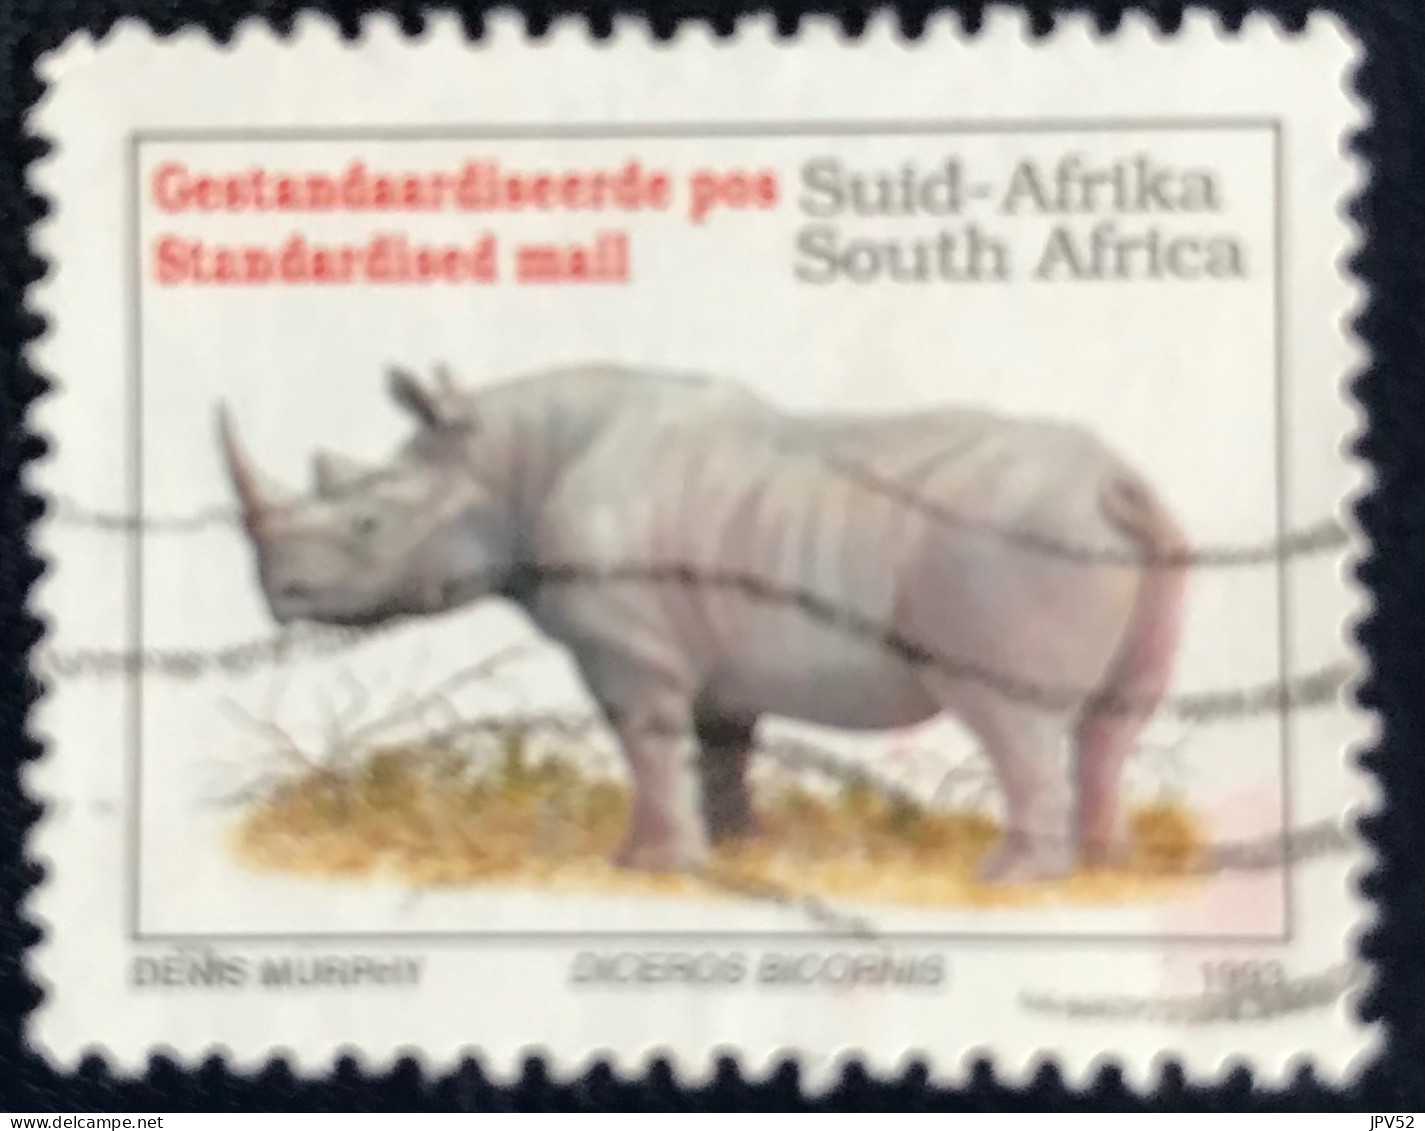 RSA - South Africa - Suid-Afrika  - C18/8 - 1996 - (°)used - Michel 896 - Bedreigde Dieren - Gebruikt